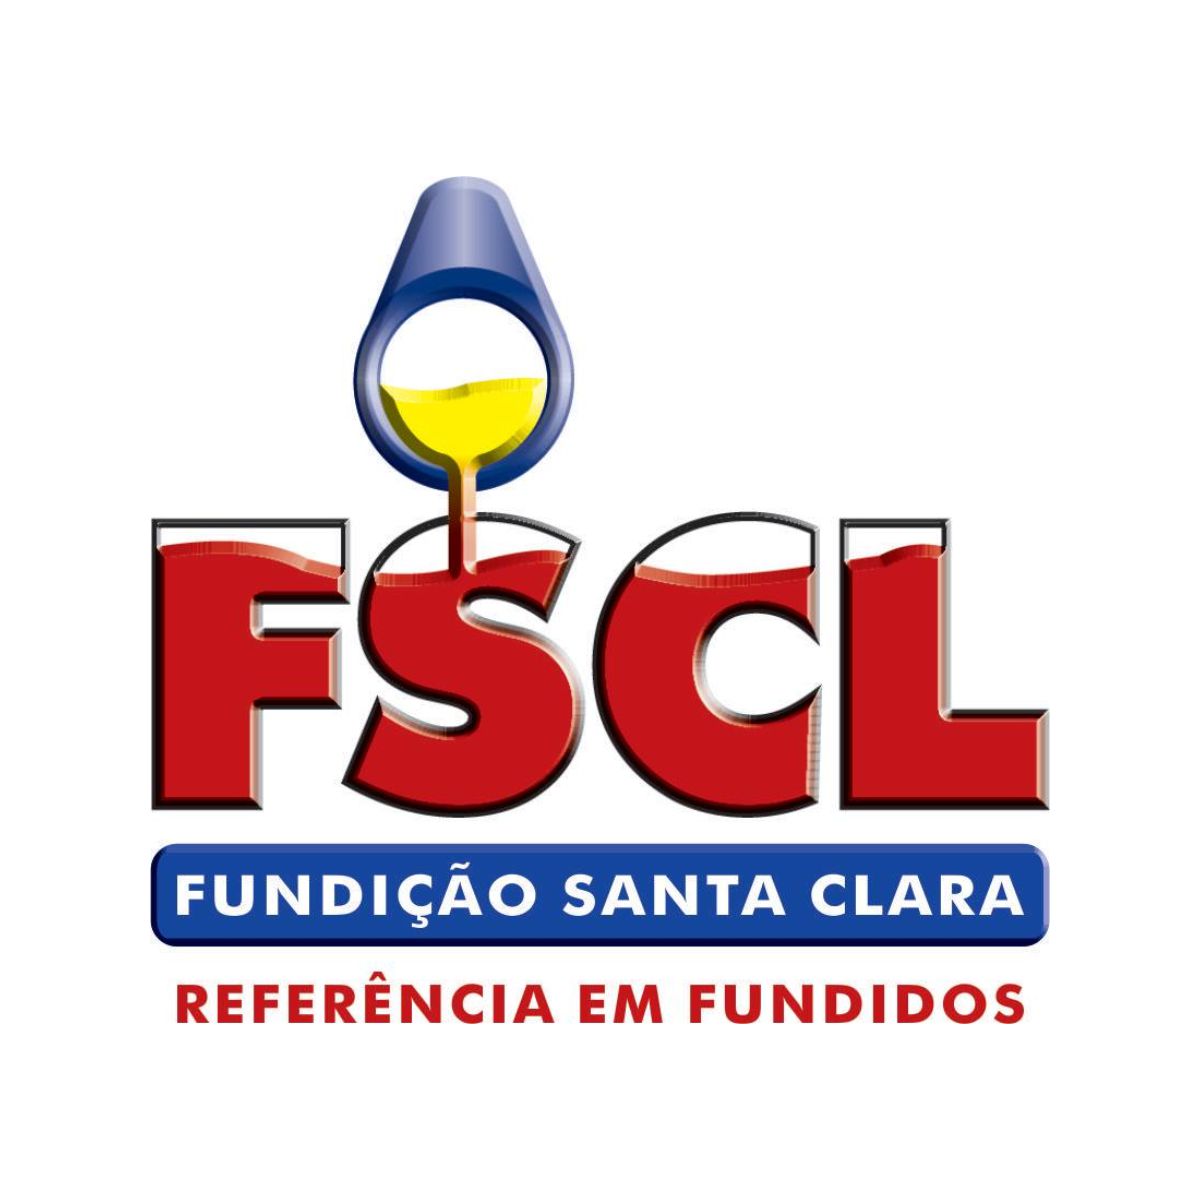 Fundição Santa Clara Ltda